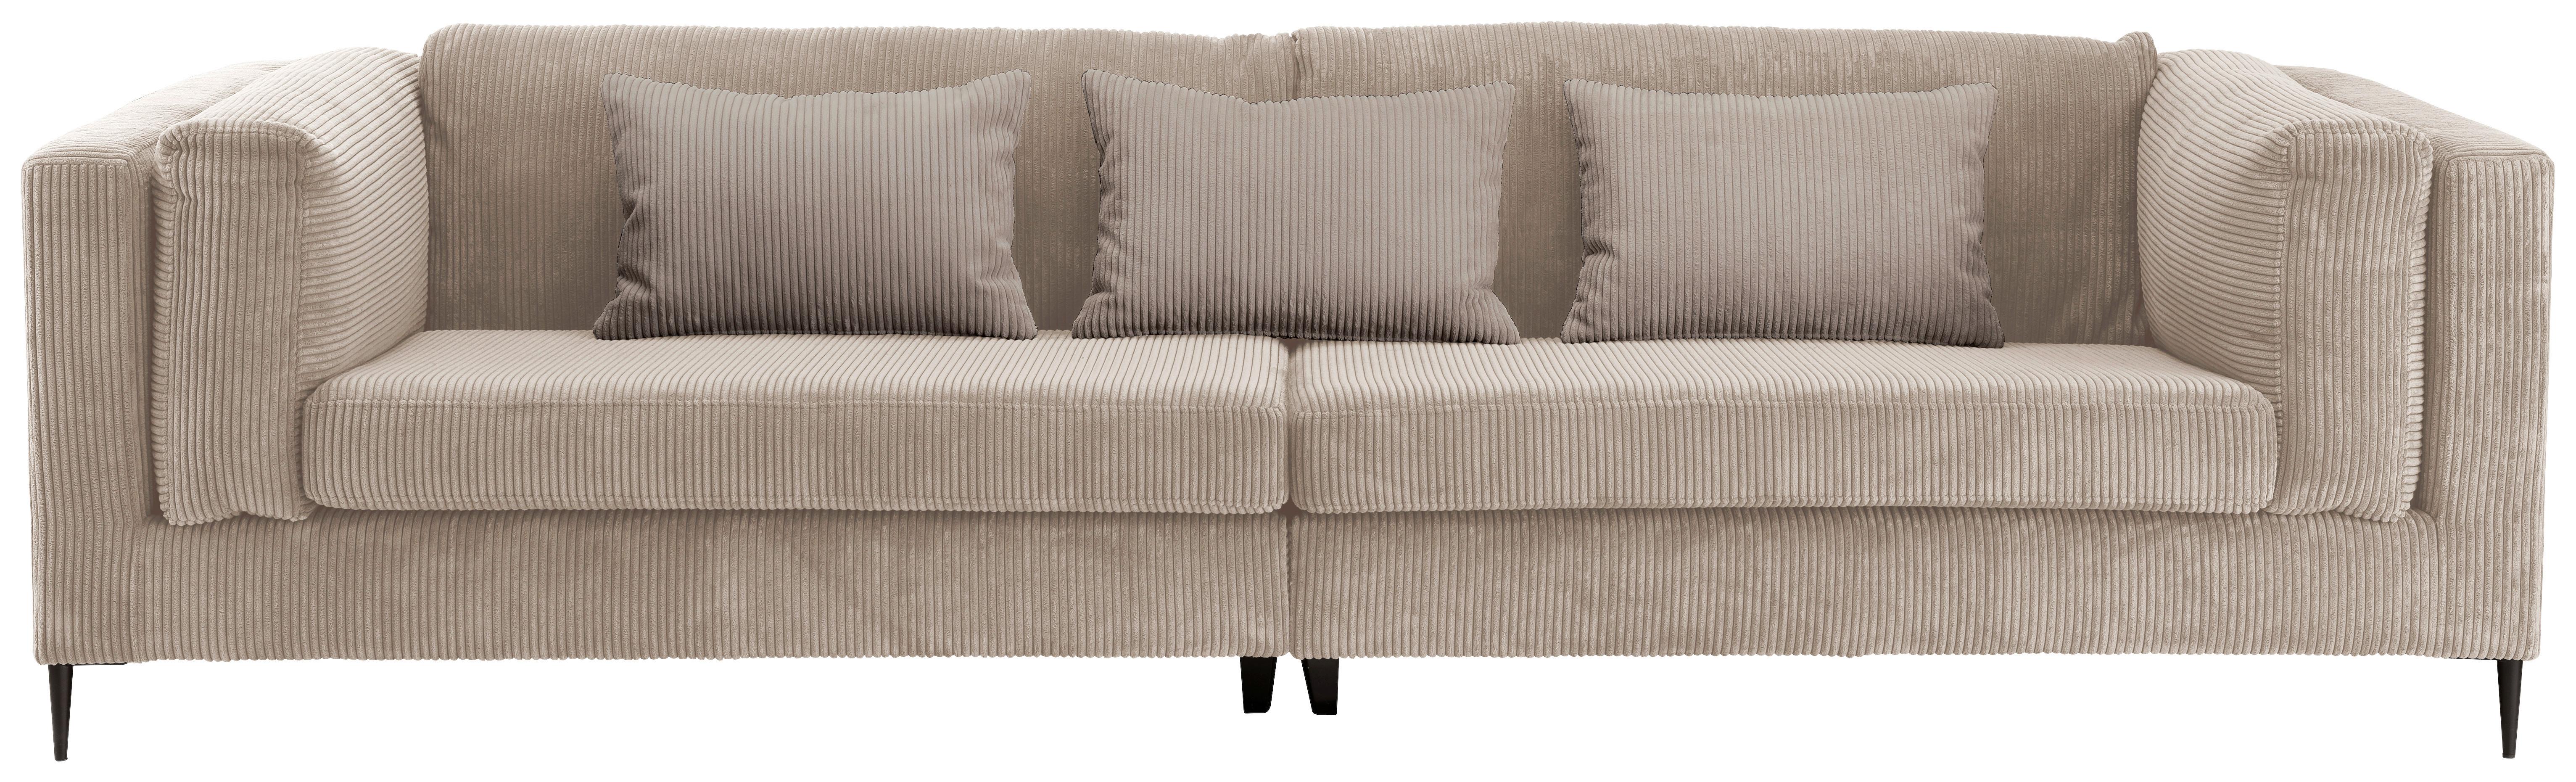 4-Sitzer-Sofa Roma Beige Kord - Beige/Schwarz, Design, Textil (306/83/113cm) - Livetastic